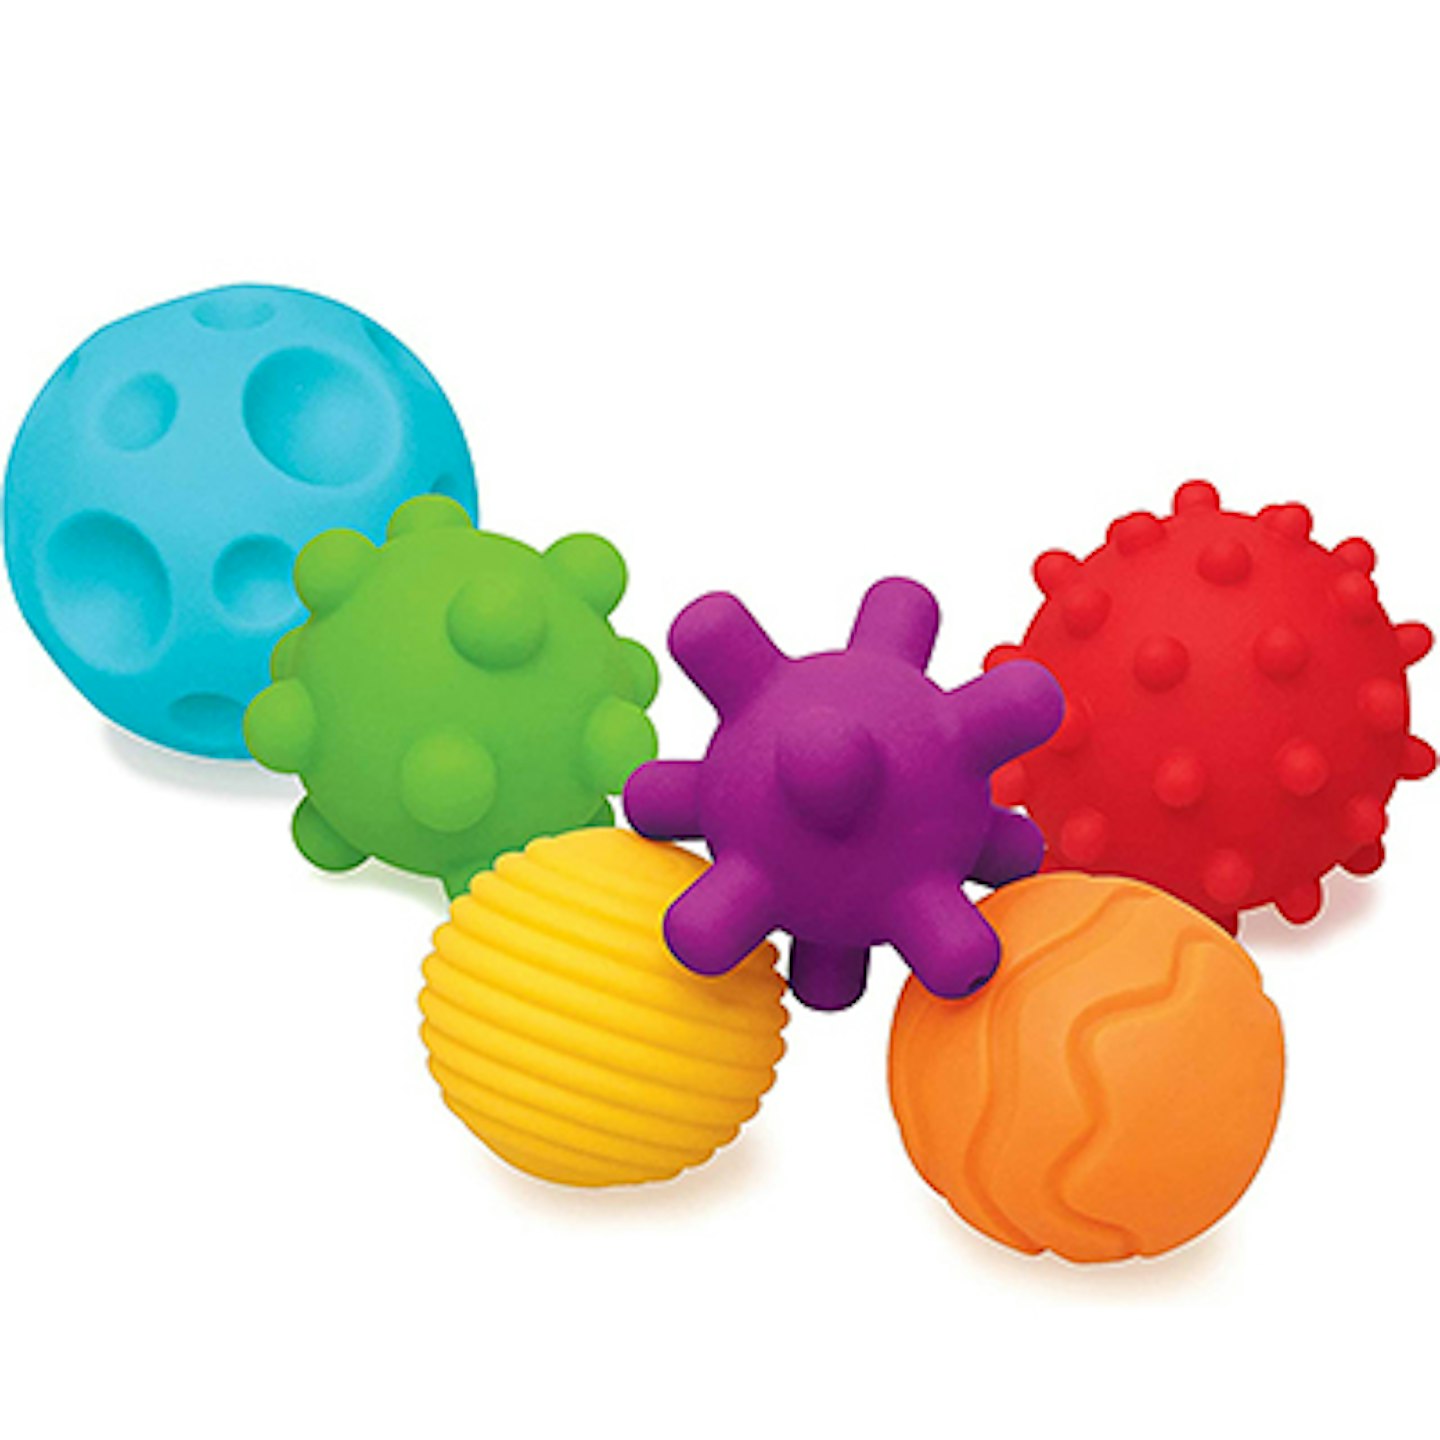 INFANTINO Textured 6 Piece Multi Ball Set